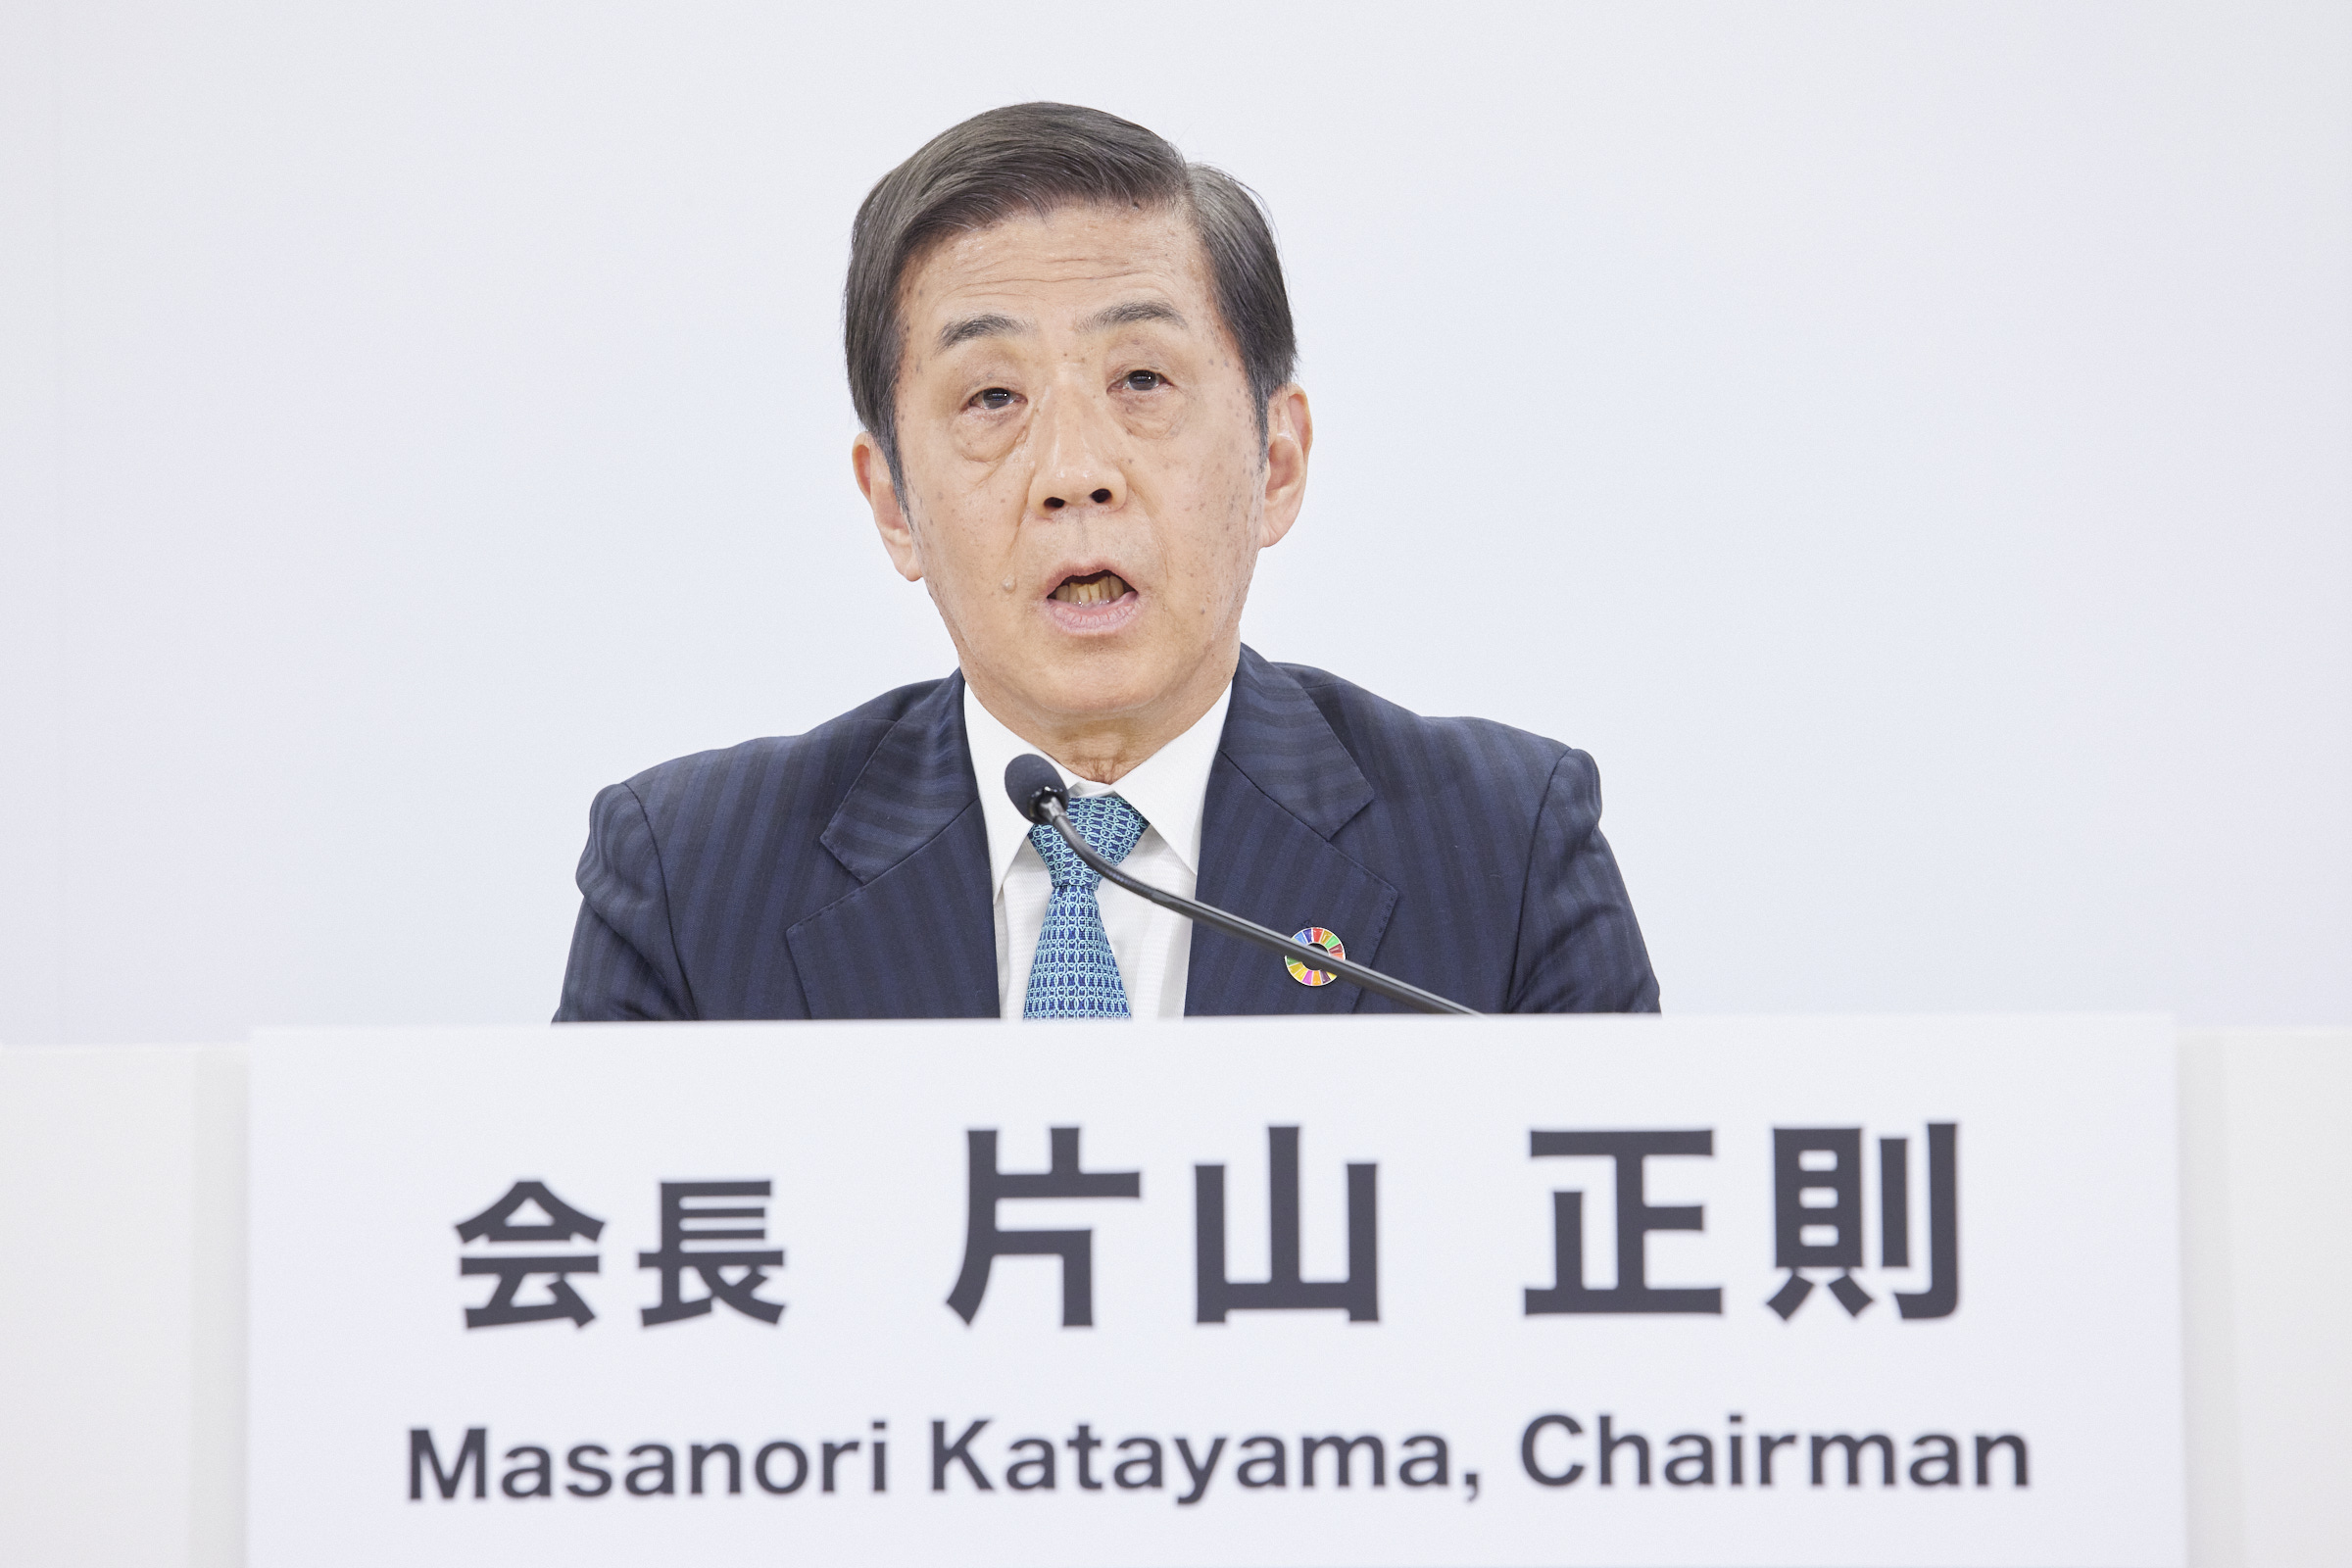 KATAYAMA Masanori, Chairman (Chairman, Isuzu Motors Ltd.)